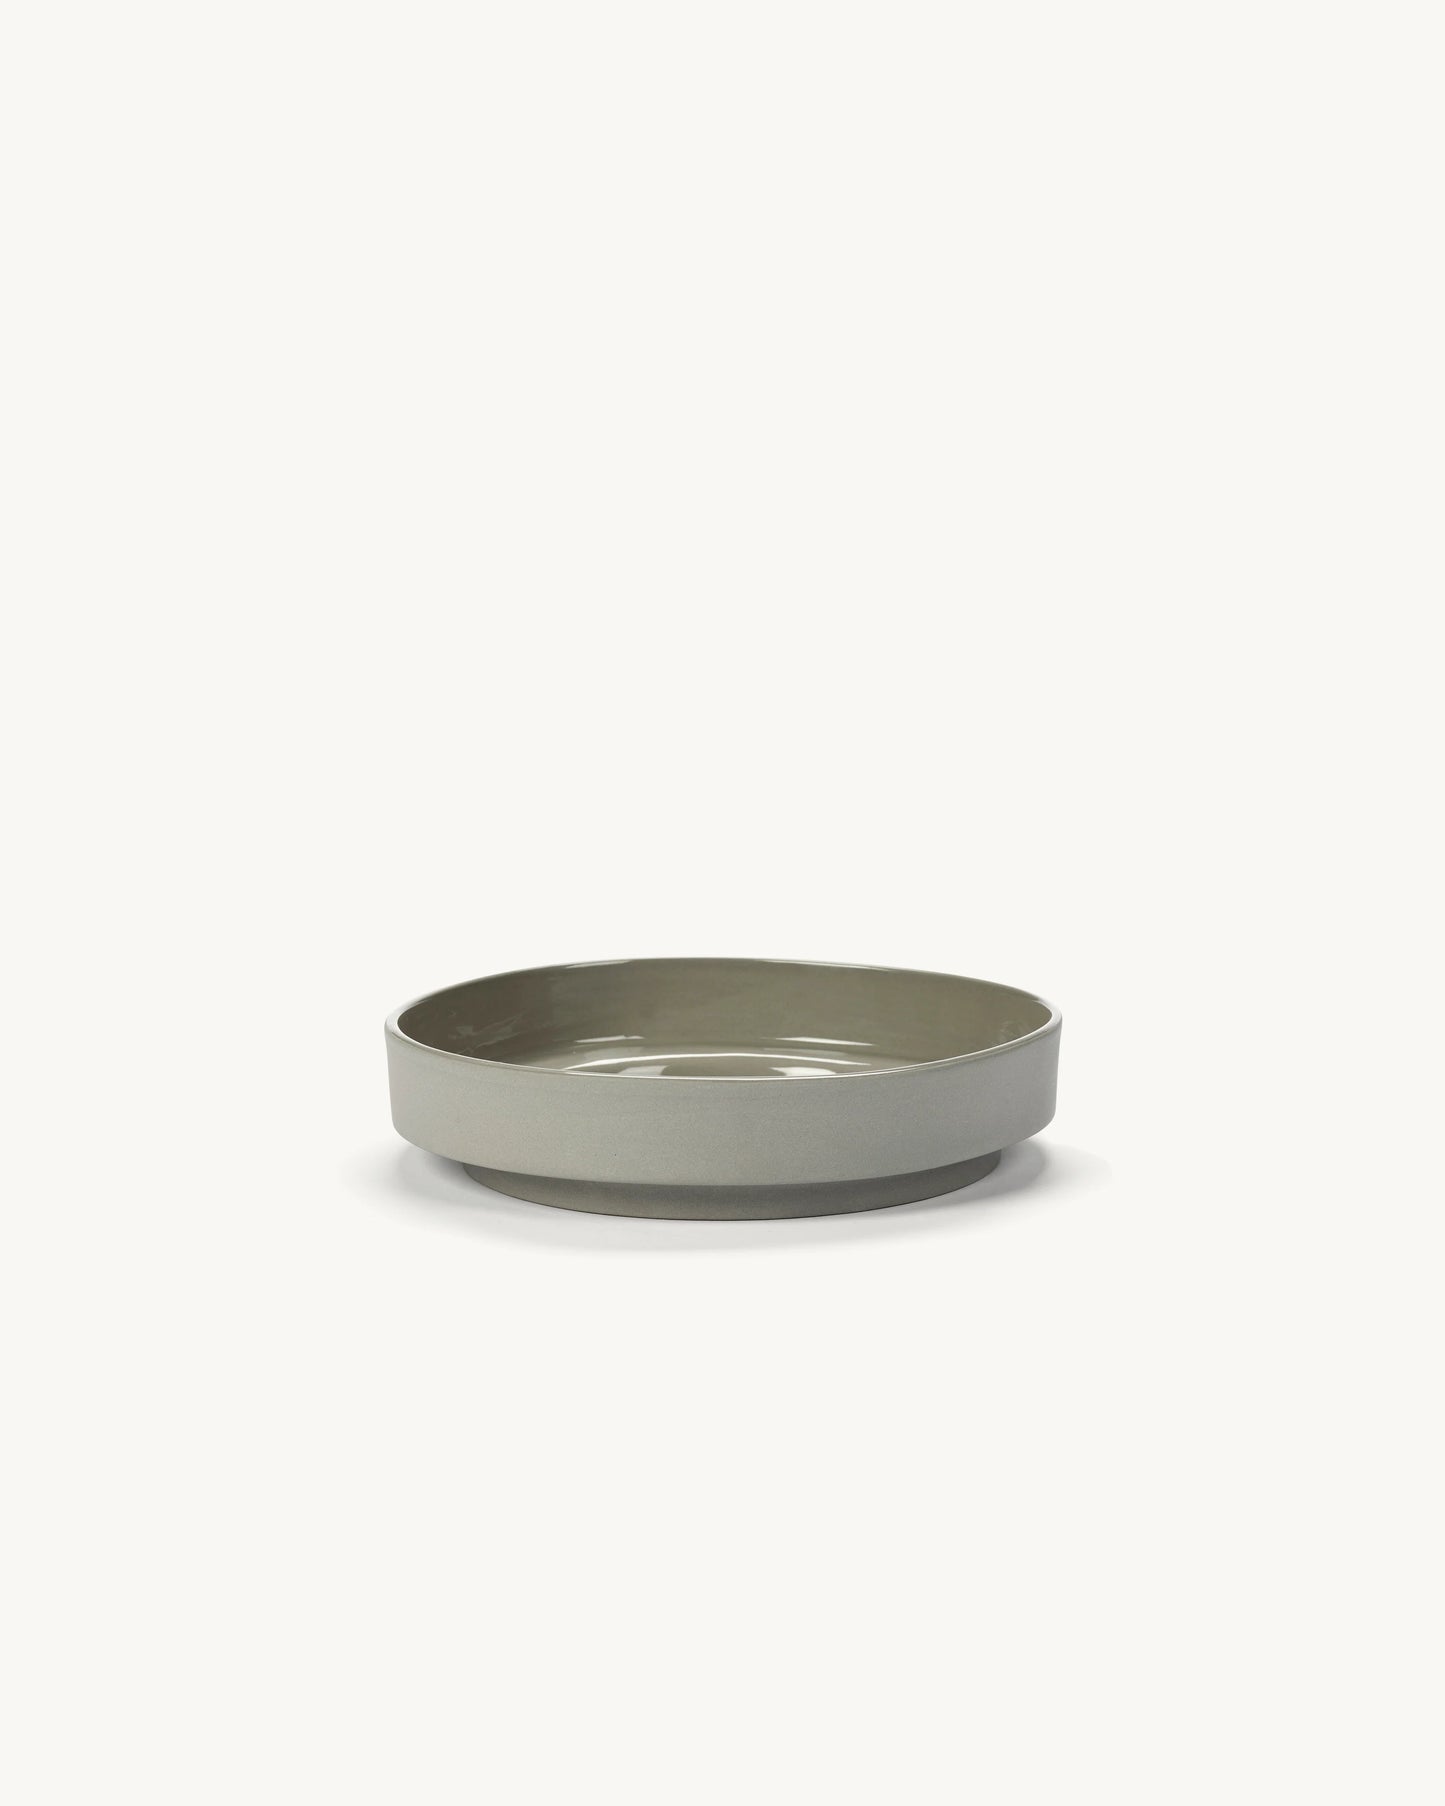 Valerie Objects Inner Circle High Plate, light grey by Maarten Baas - $69.00